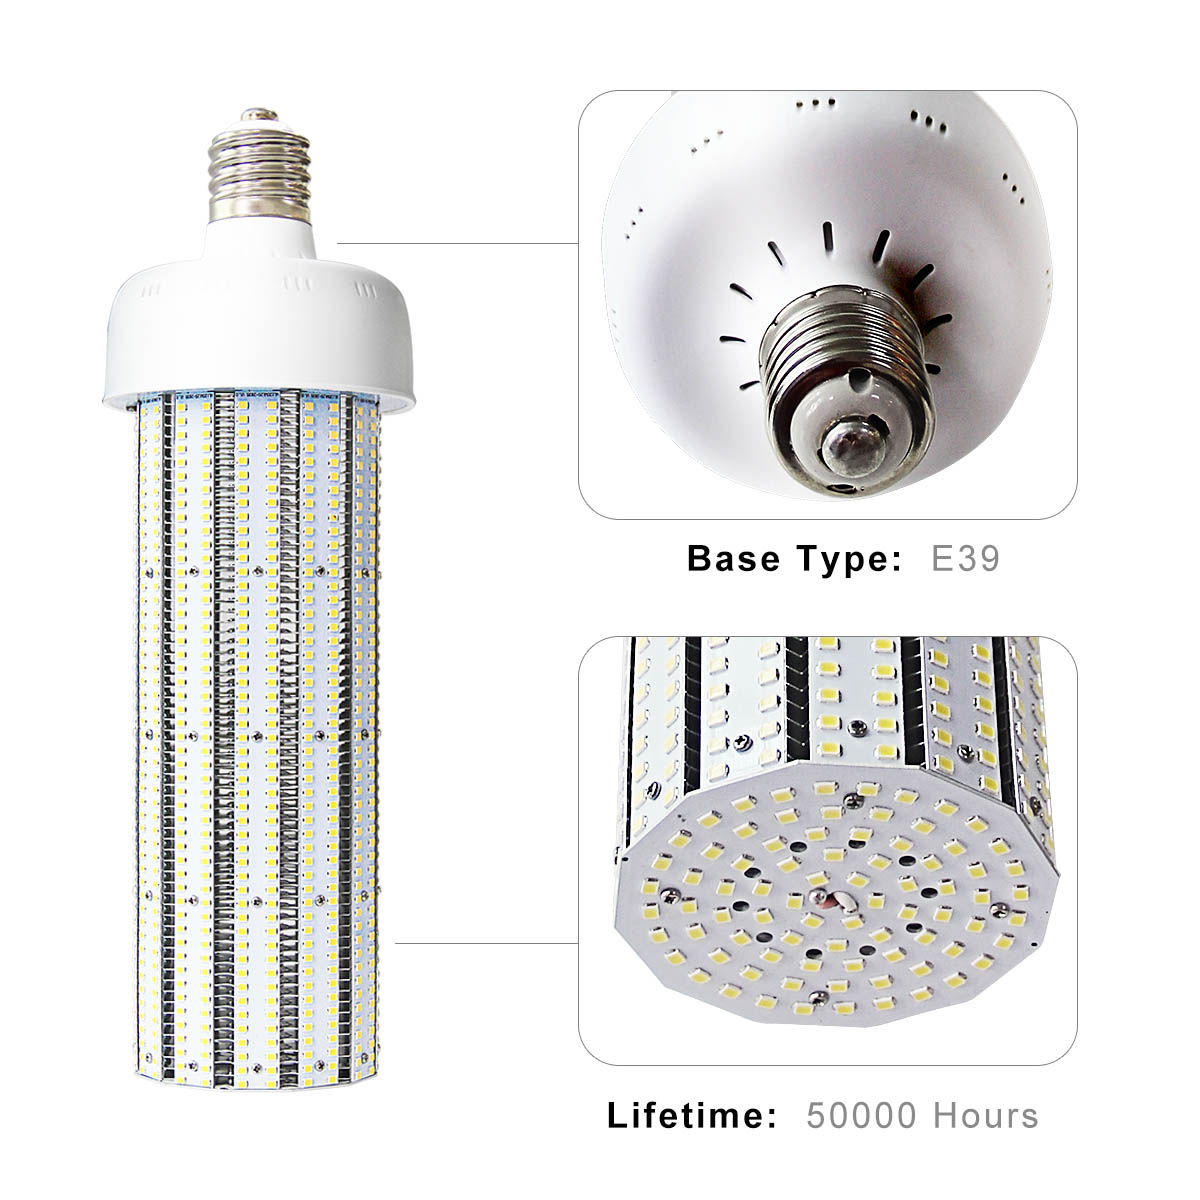 KAWELL 120W LED Corn Light Bulb E39 Large Mogul Base Street/Area Light Bulb for Fixtures HID/HPS/Metal Halide or CFL, 14400 lumen 6500K(Daylight) 360°Flood Light UL Listed/TUV-Qualified/DLC Certified 